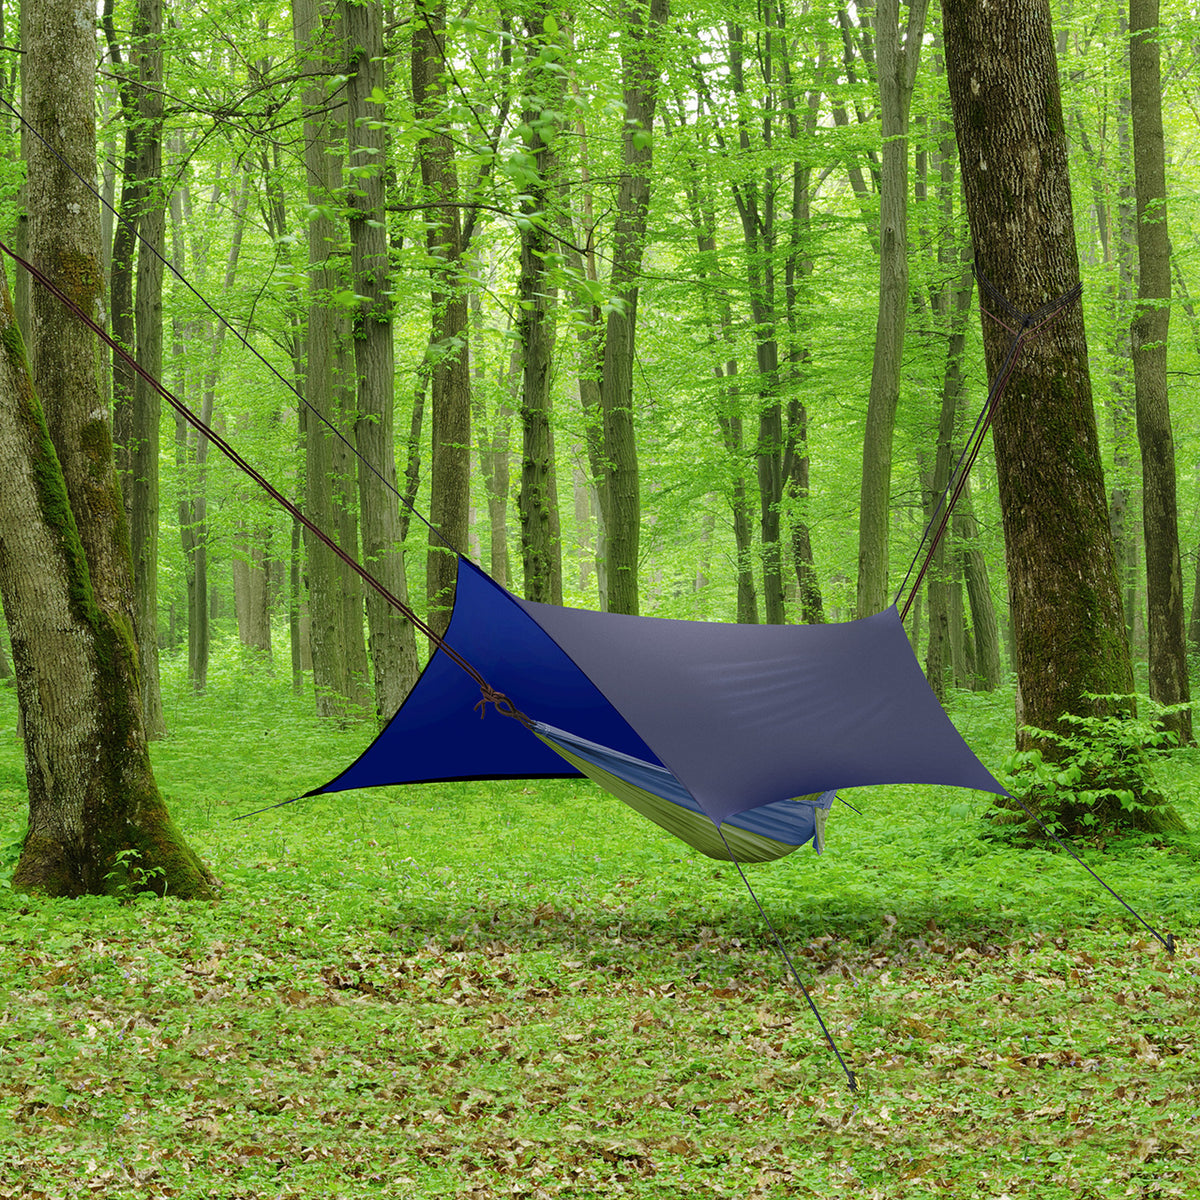 Bliss Hammocks XL Hammock Rain Tarp hung over a camping hammock in the woods.